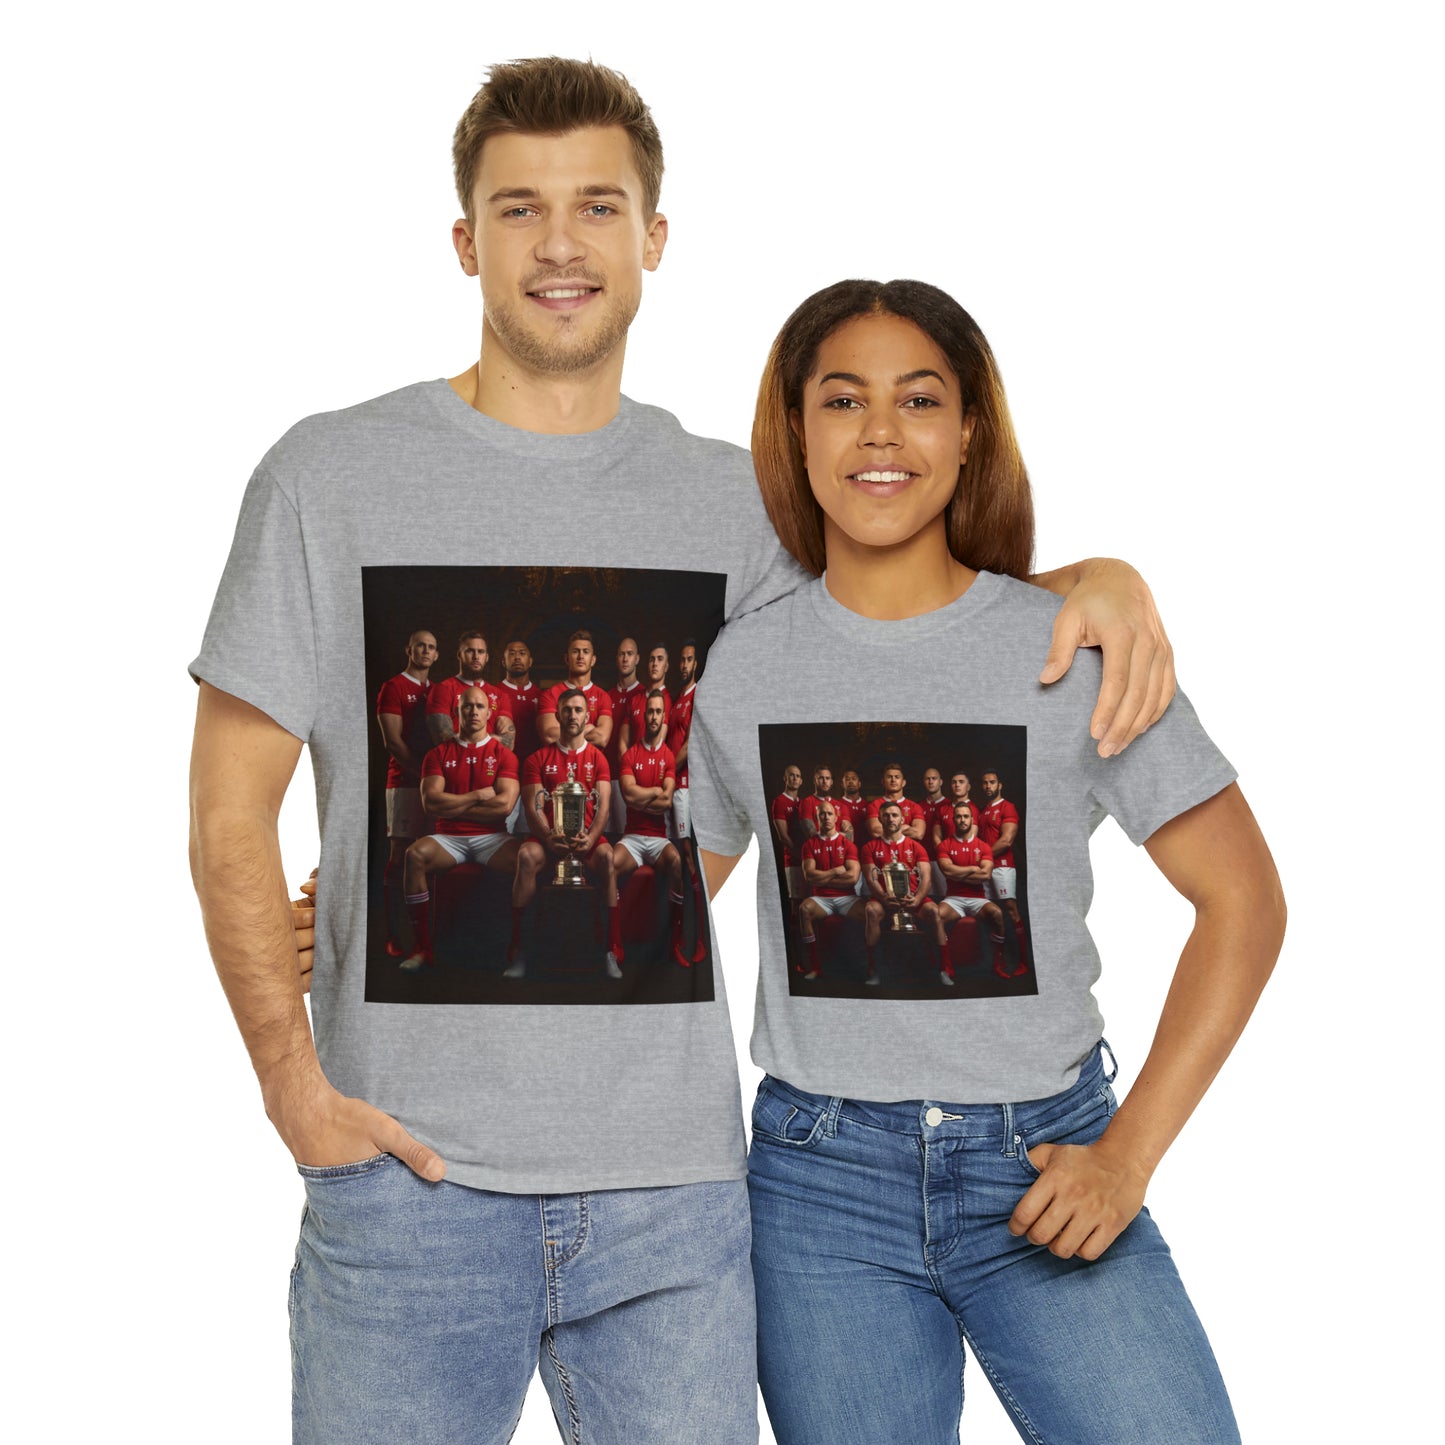 Wales RWC Photoshoot - light shirts